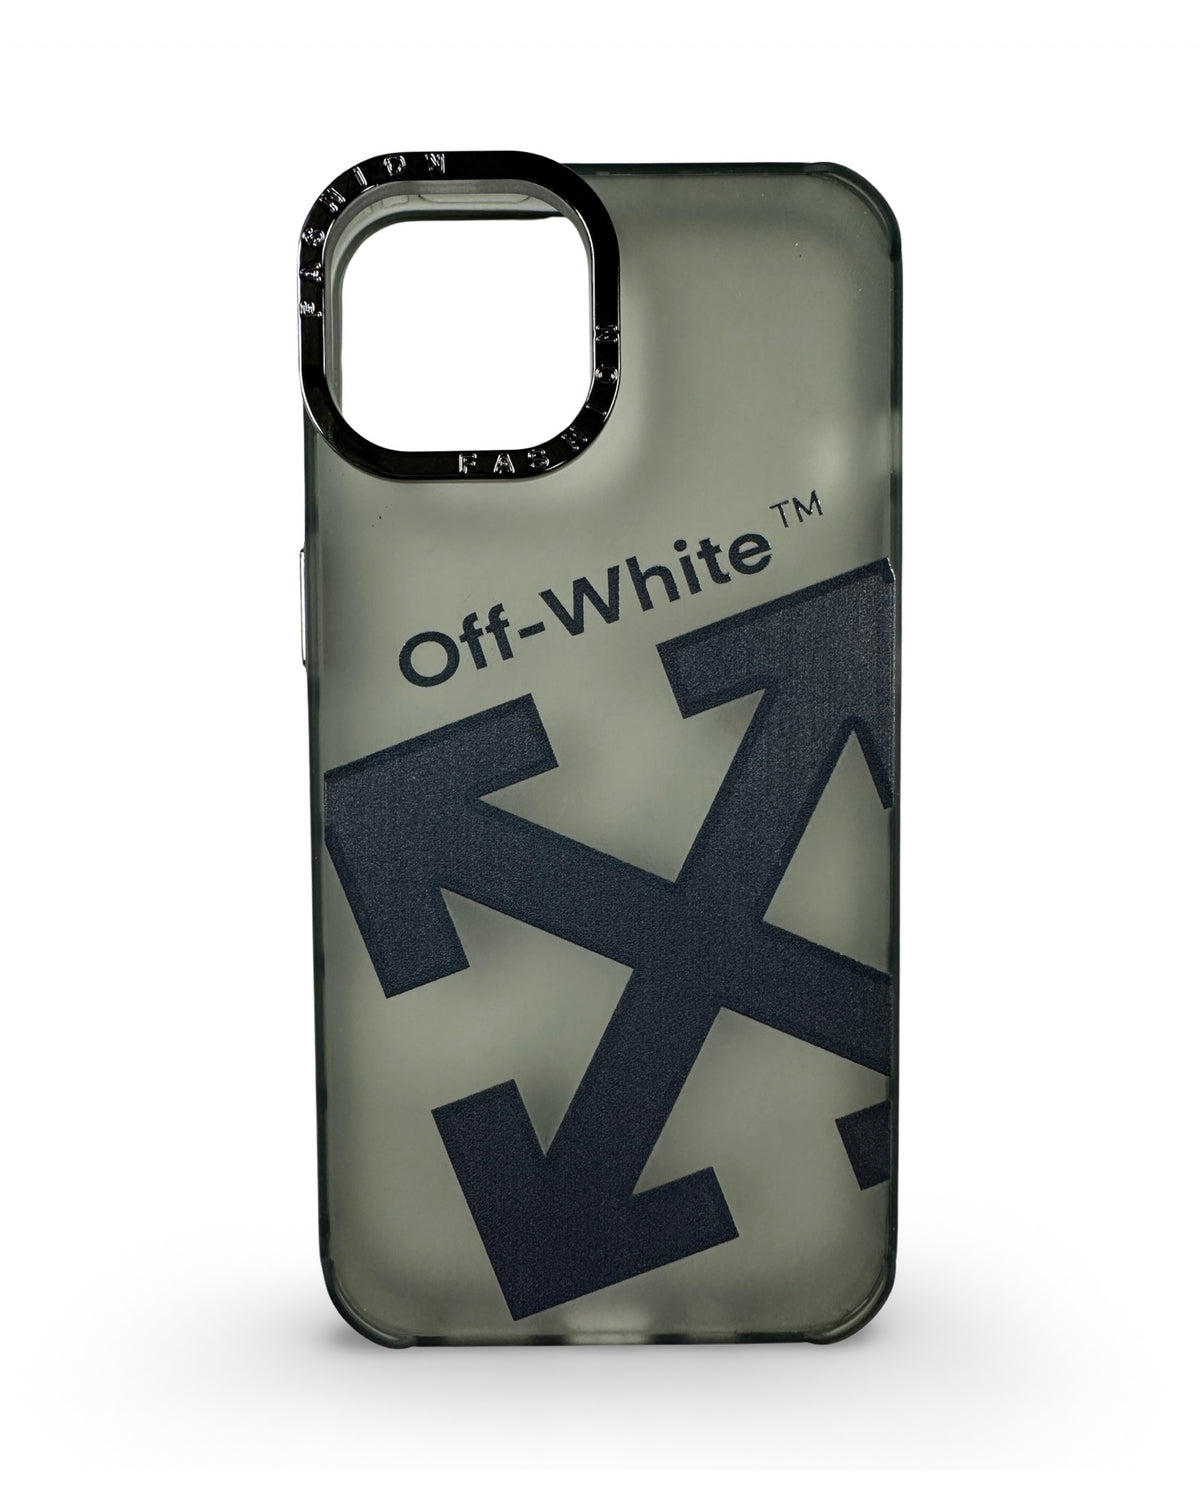 CaseNerd "OW X" iPhone Case